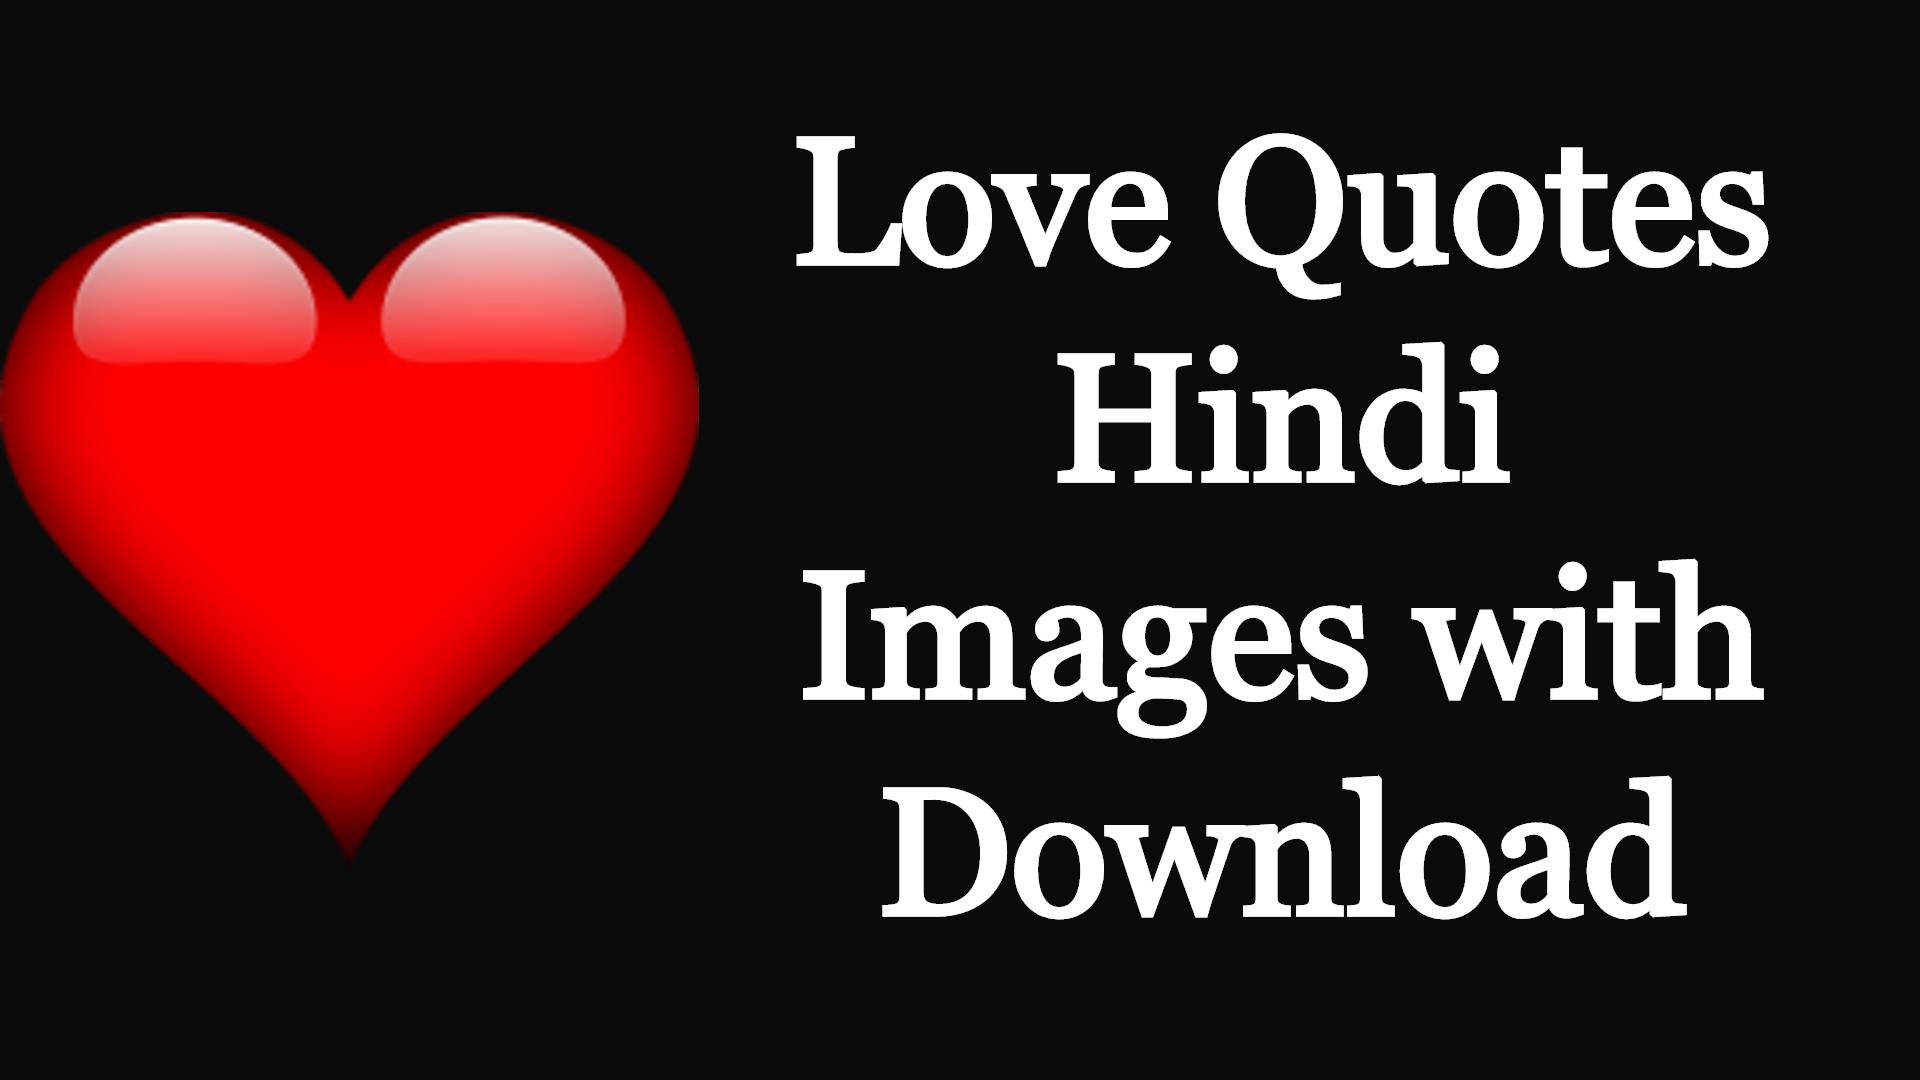 Love Quotes Hindi Images with Download|HD|खुबसूरत 1000 तस्वीरें